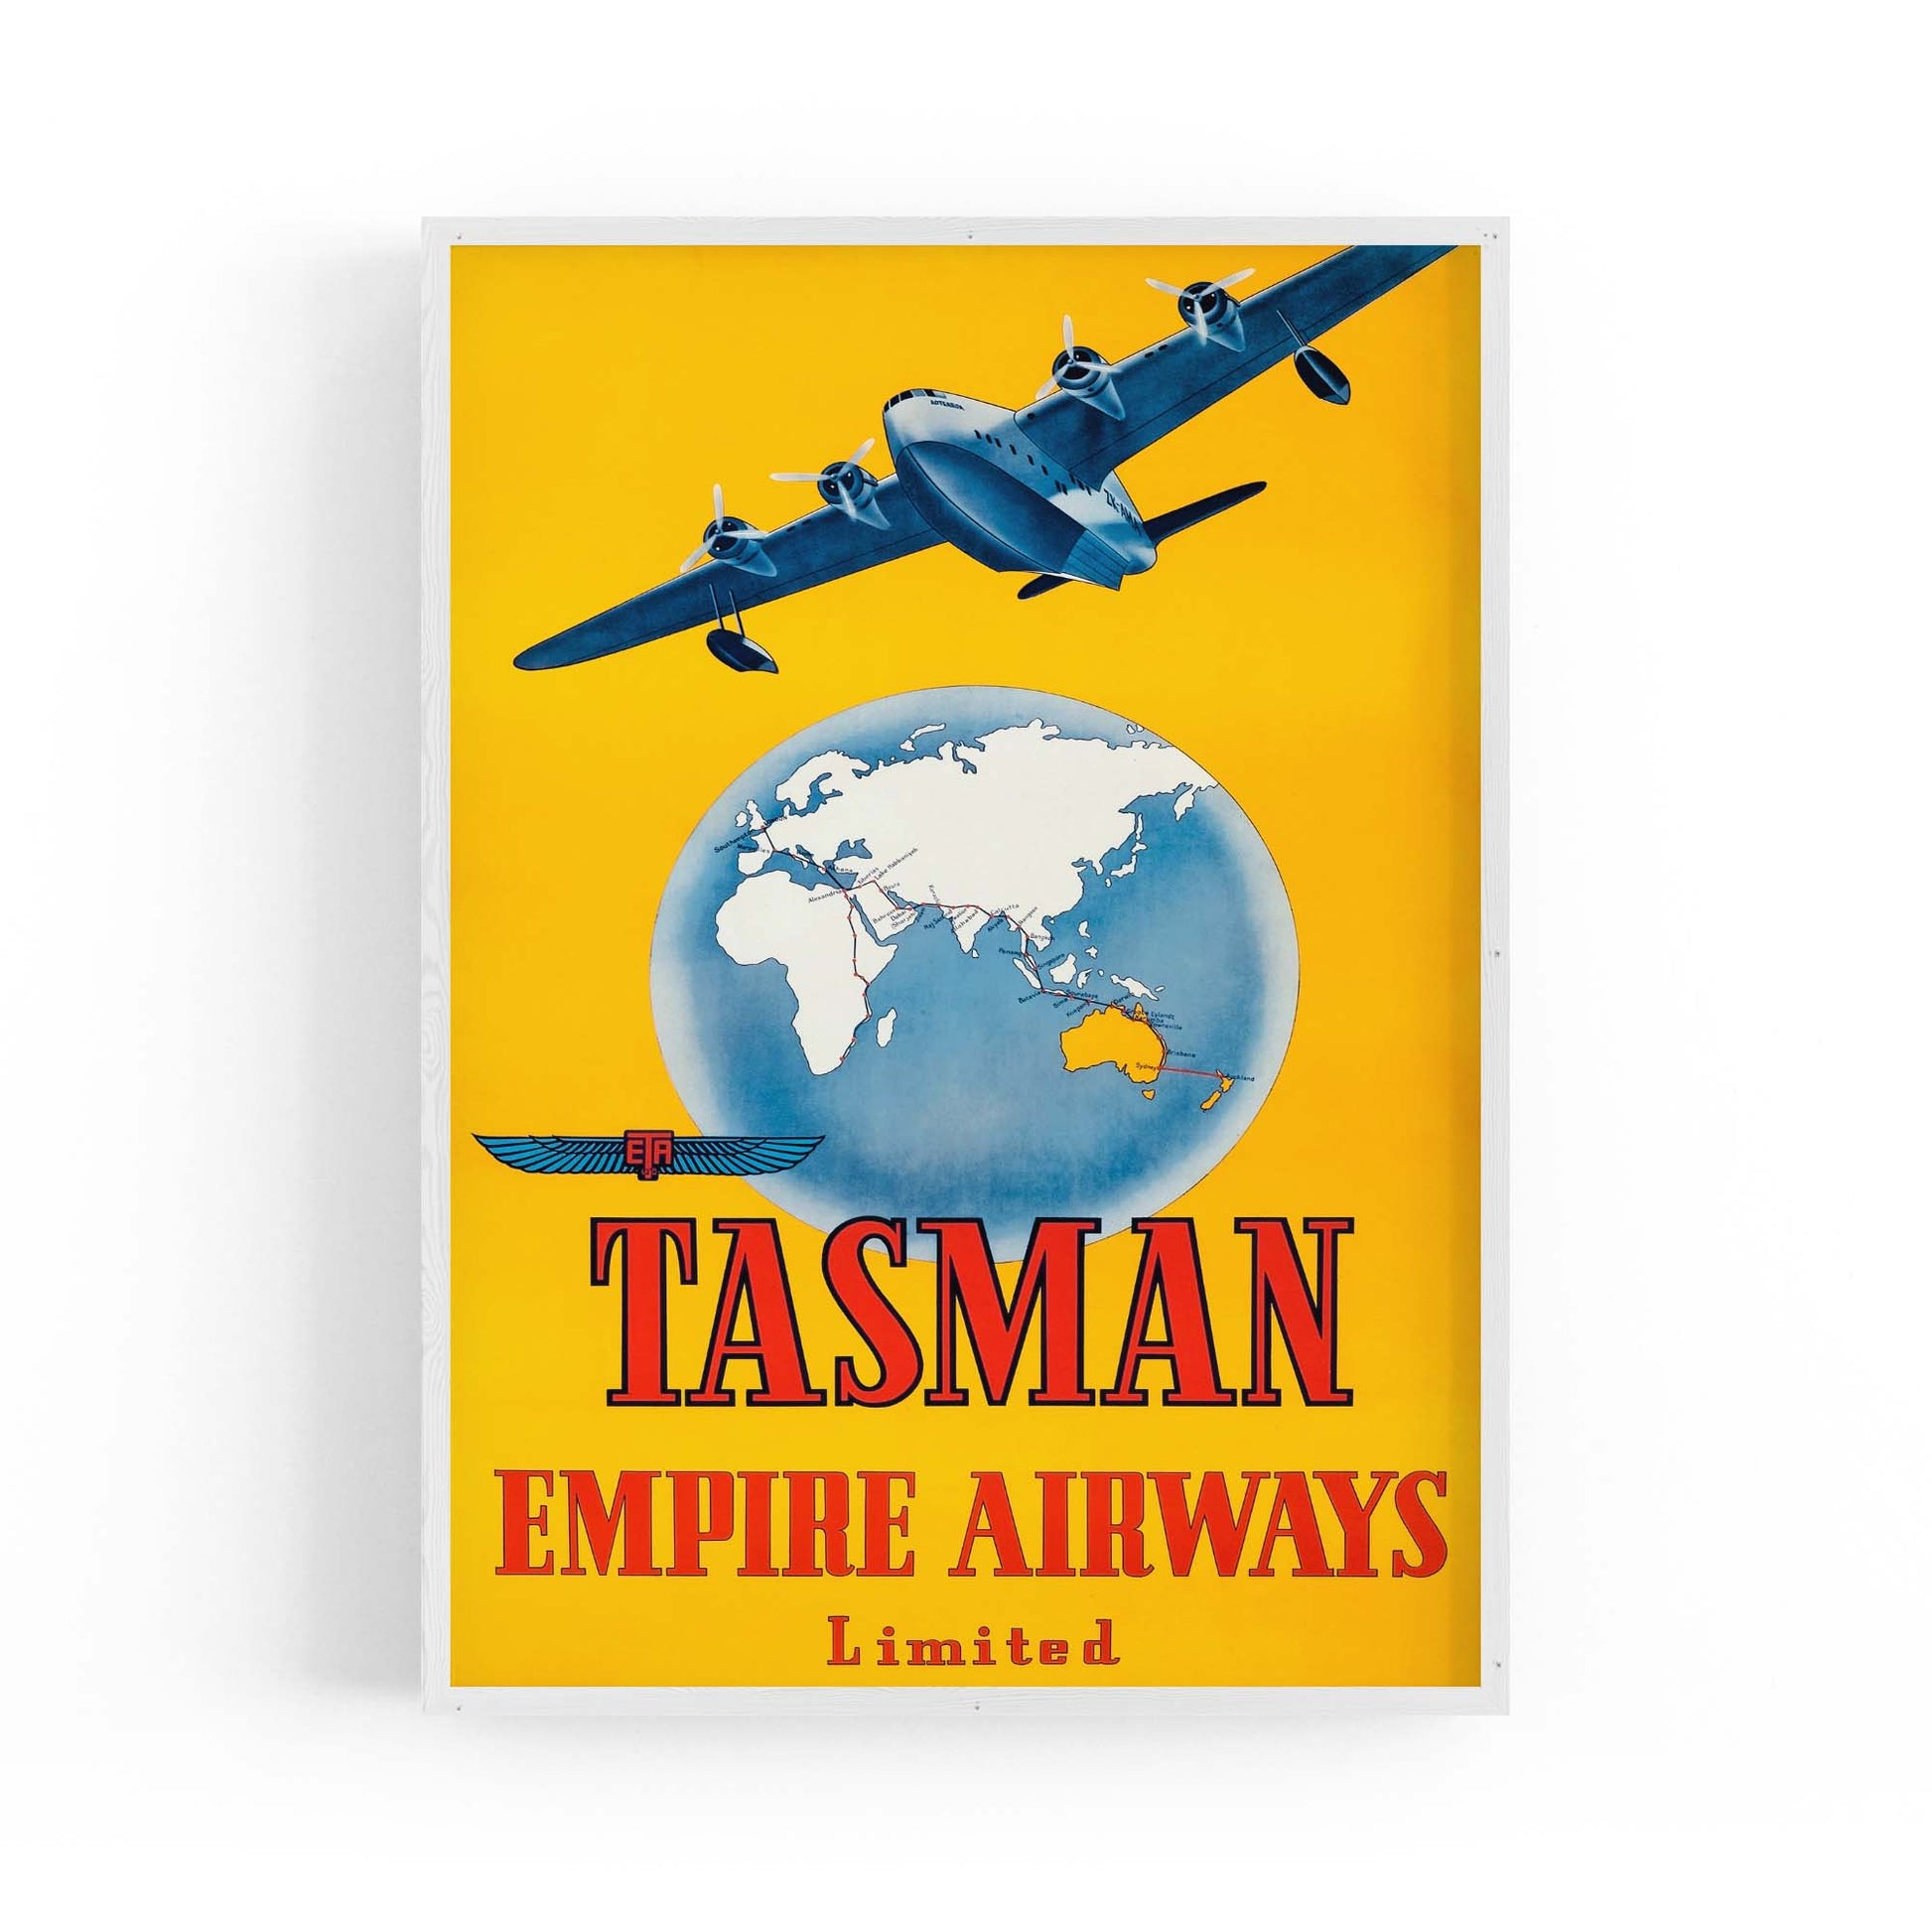 Tasman Empire Airways Vintage Travel Advert Wall Art - The Affordable Art Company